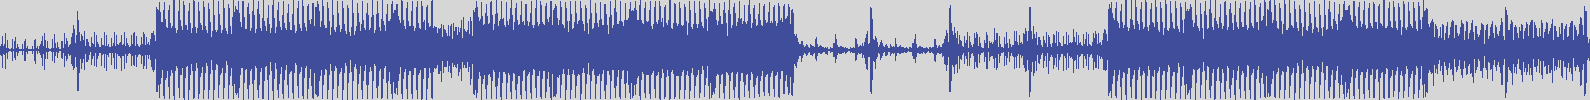 nf_boyz_records [NFY071] Black Jag - Black Tulip [Night Mix] audio wave form